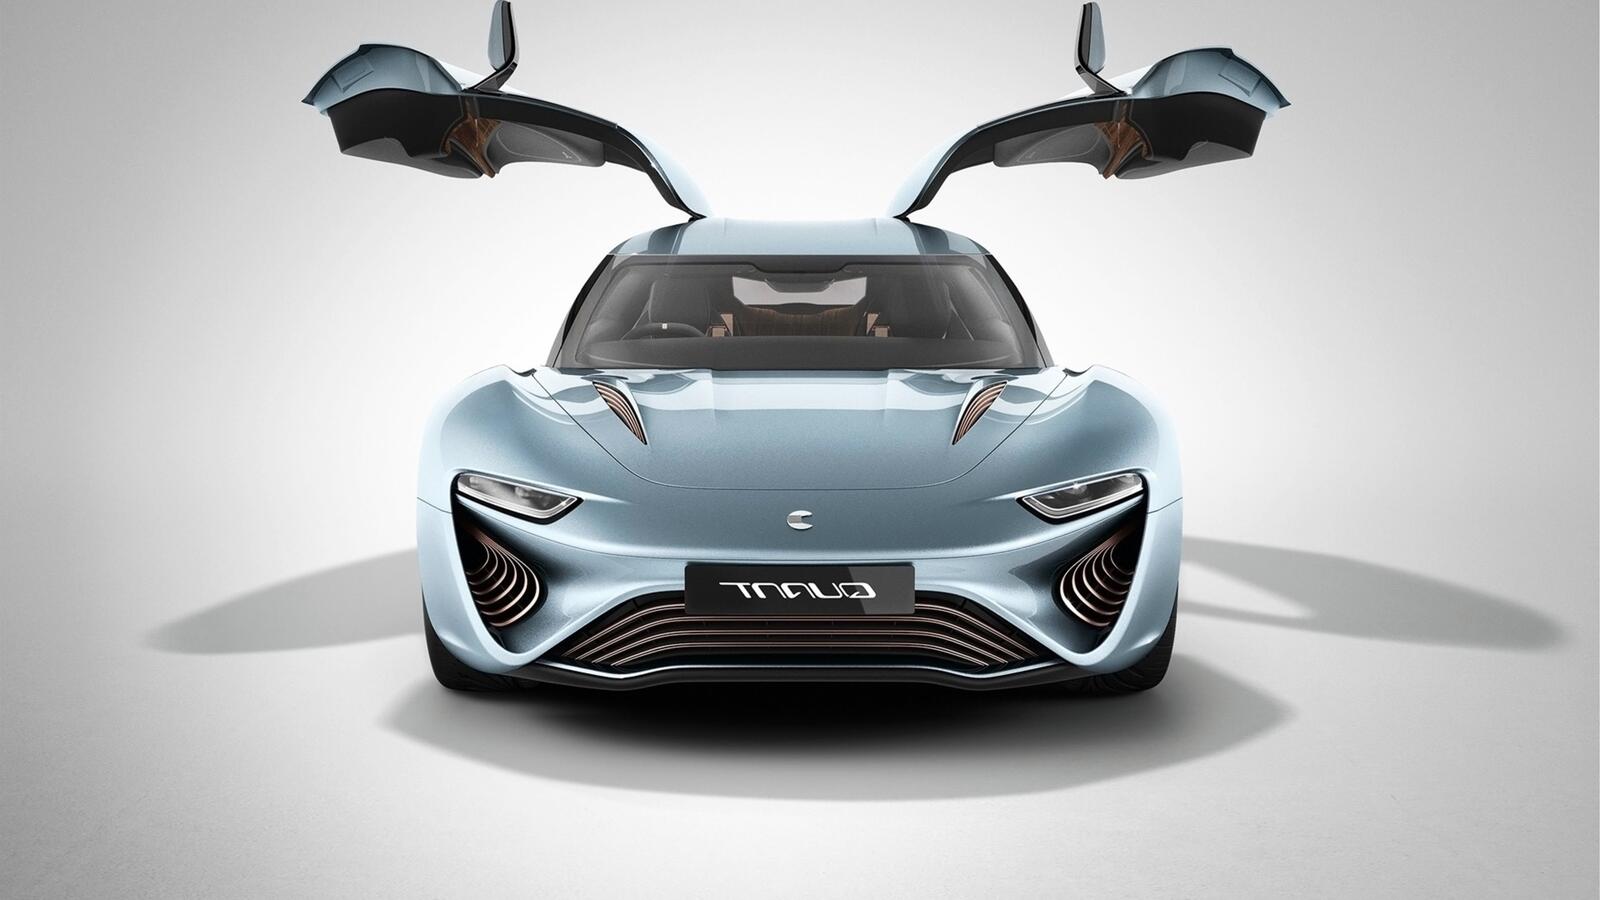 Wallpapers cars Concept Cars nanoflowcell quantico on the desktop